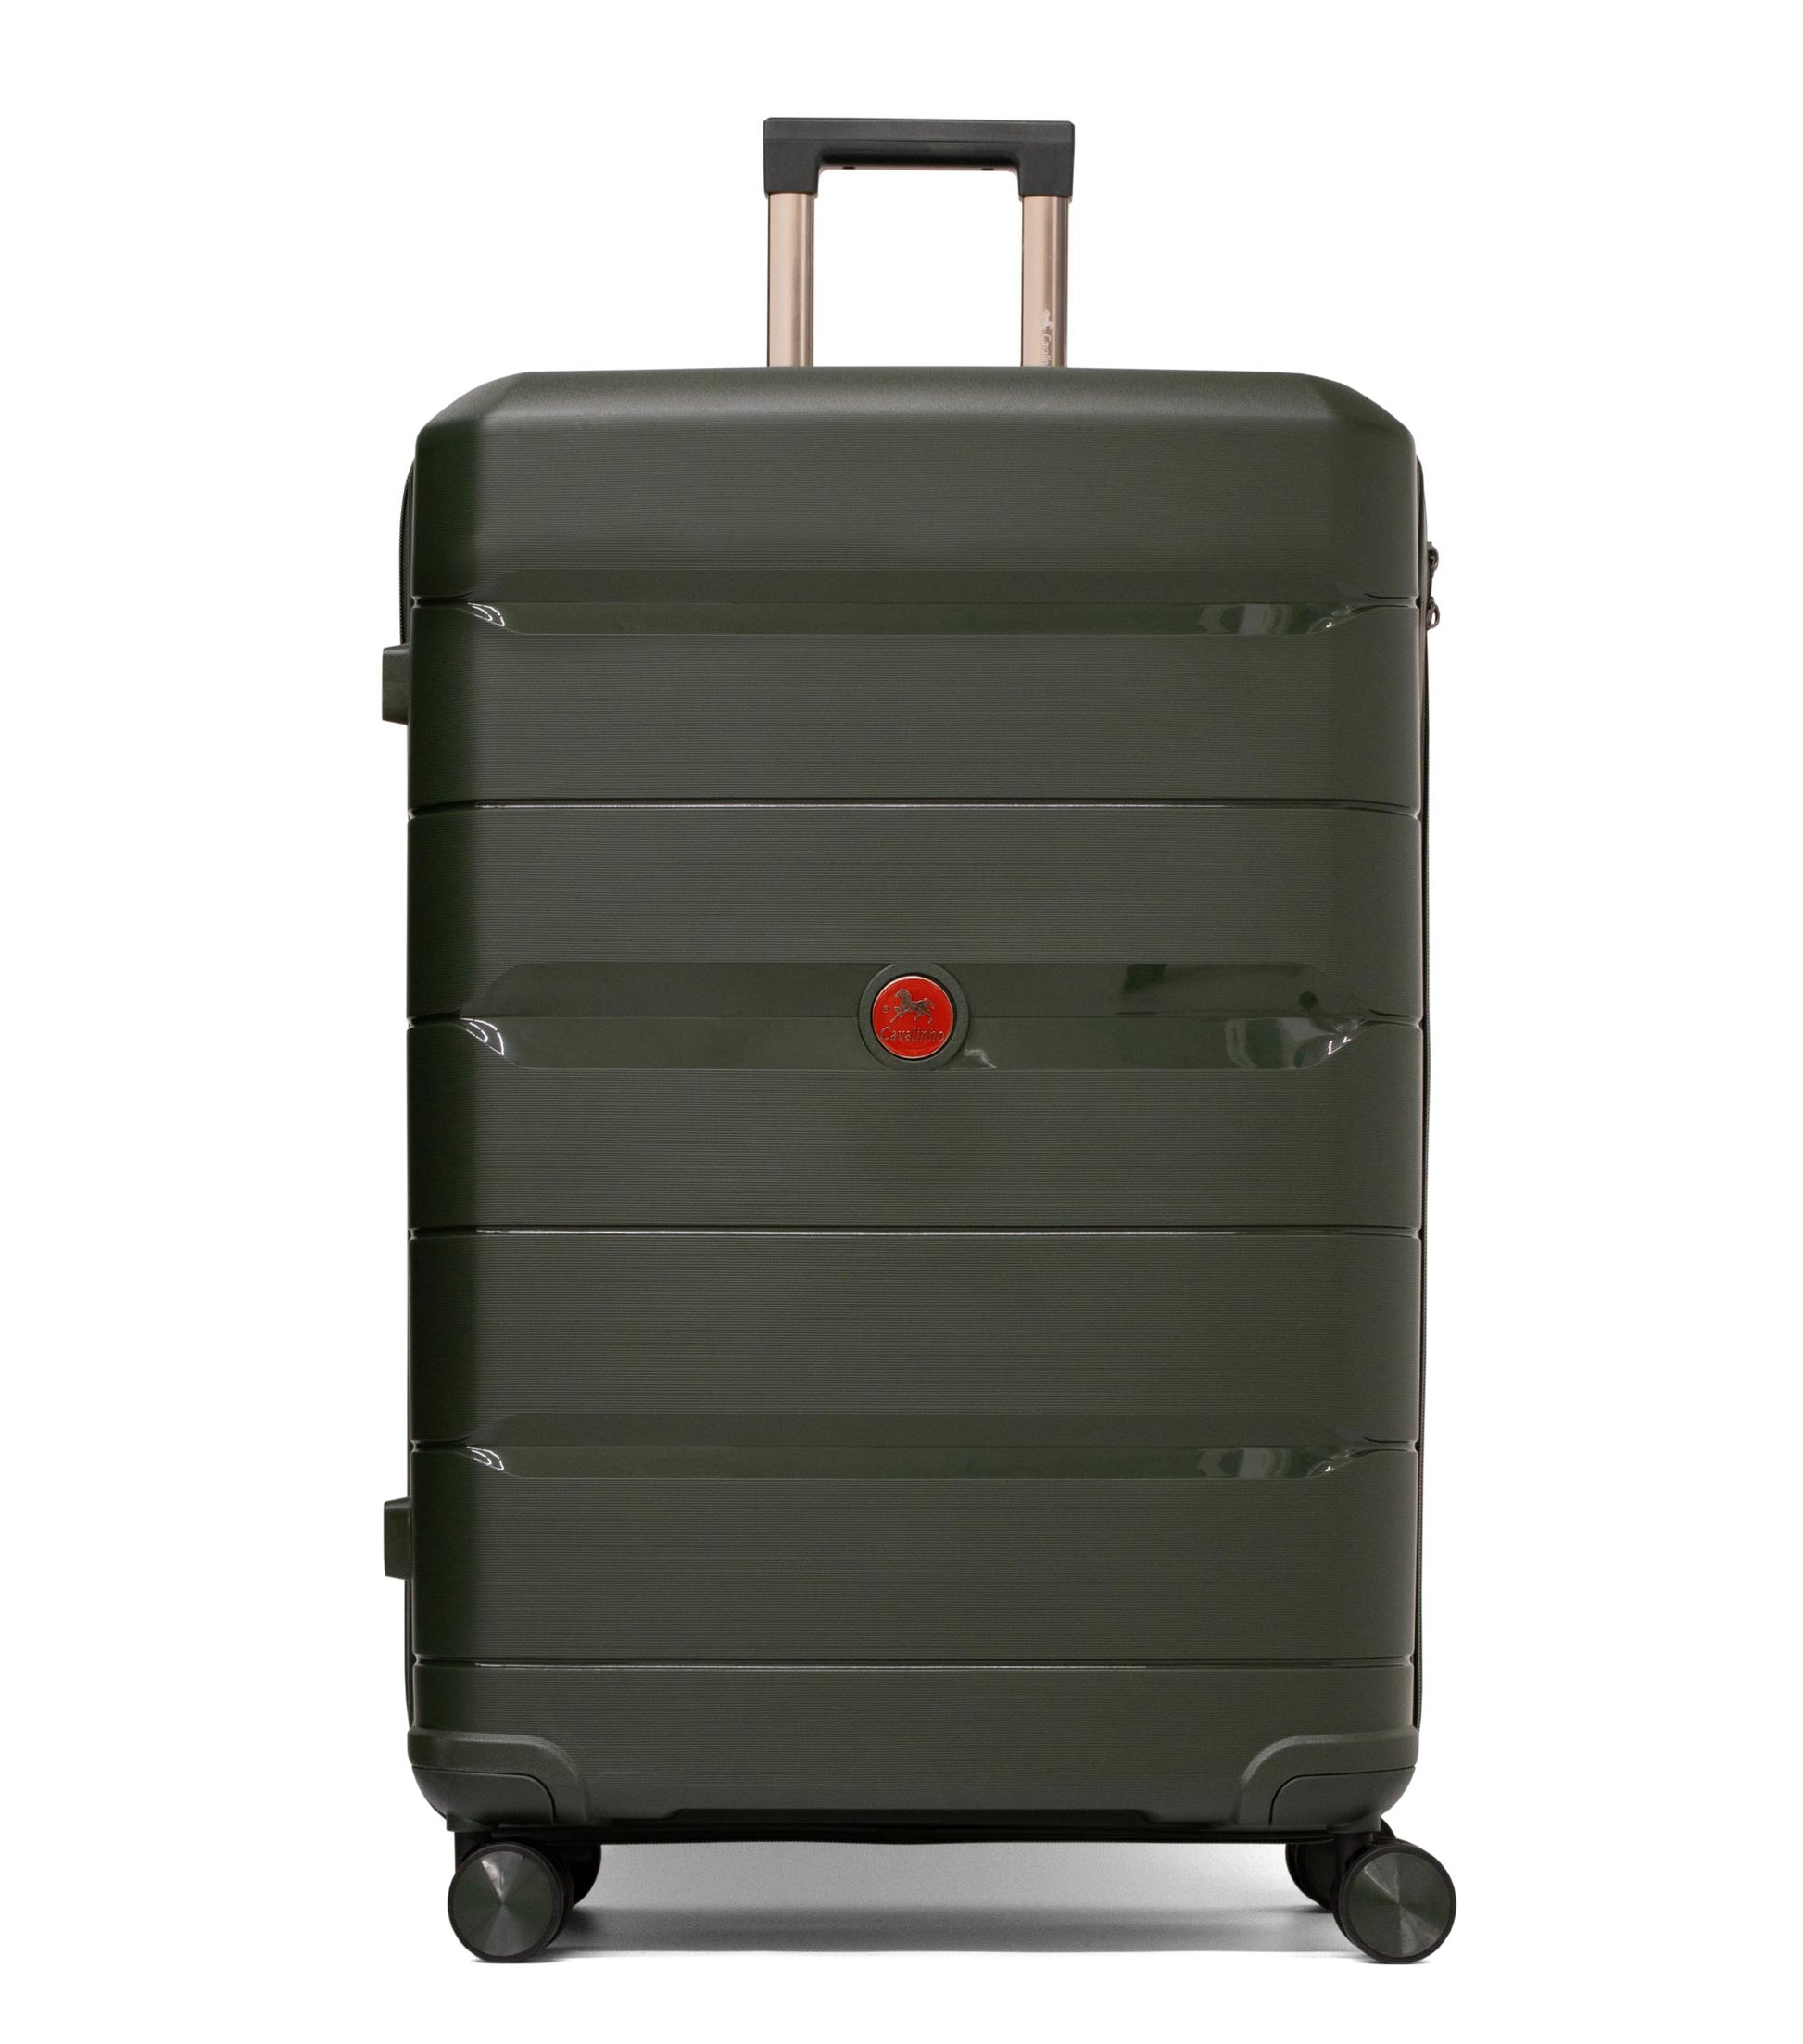 Cavalinho Oasis Check-in Hardside Luggage (28") - 28 inch DarkOliveGreen - 68040001.09.28_1